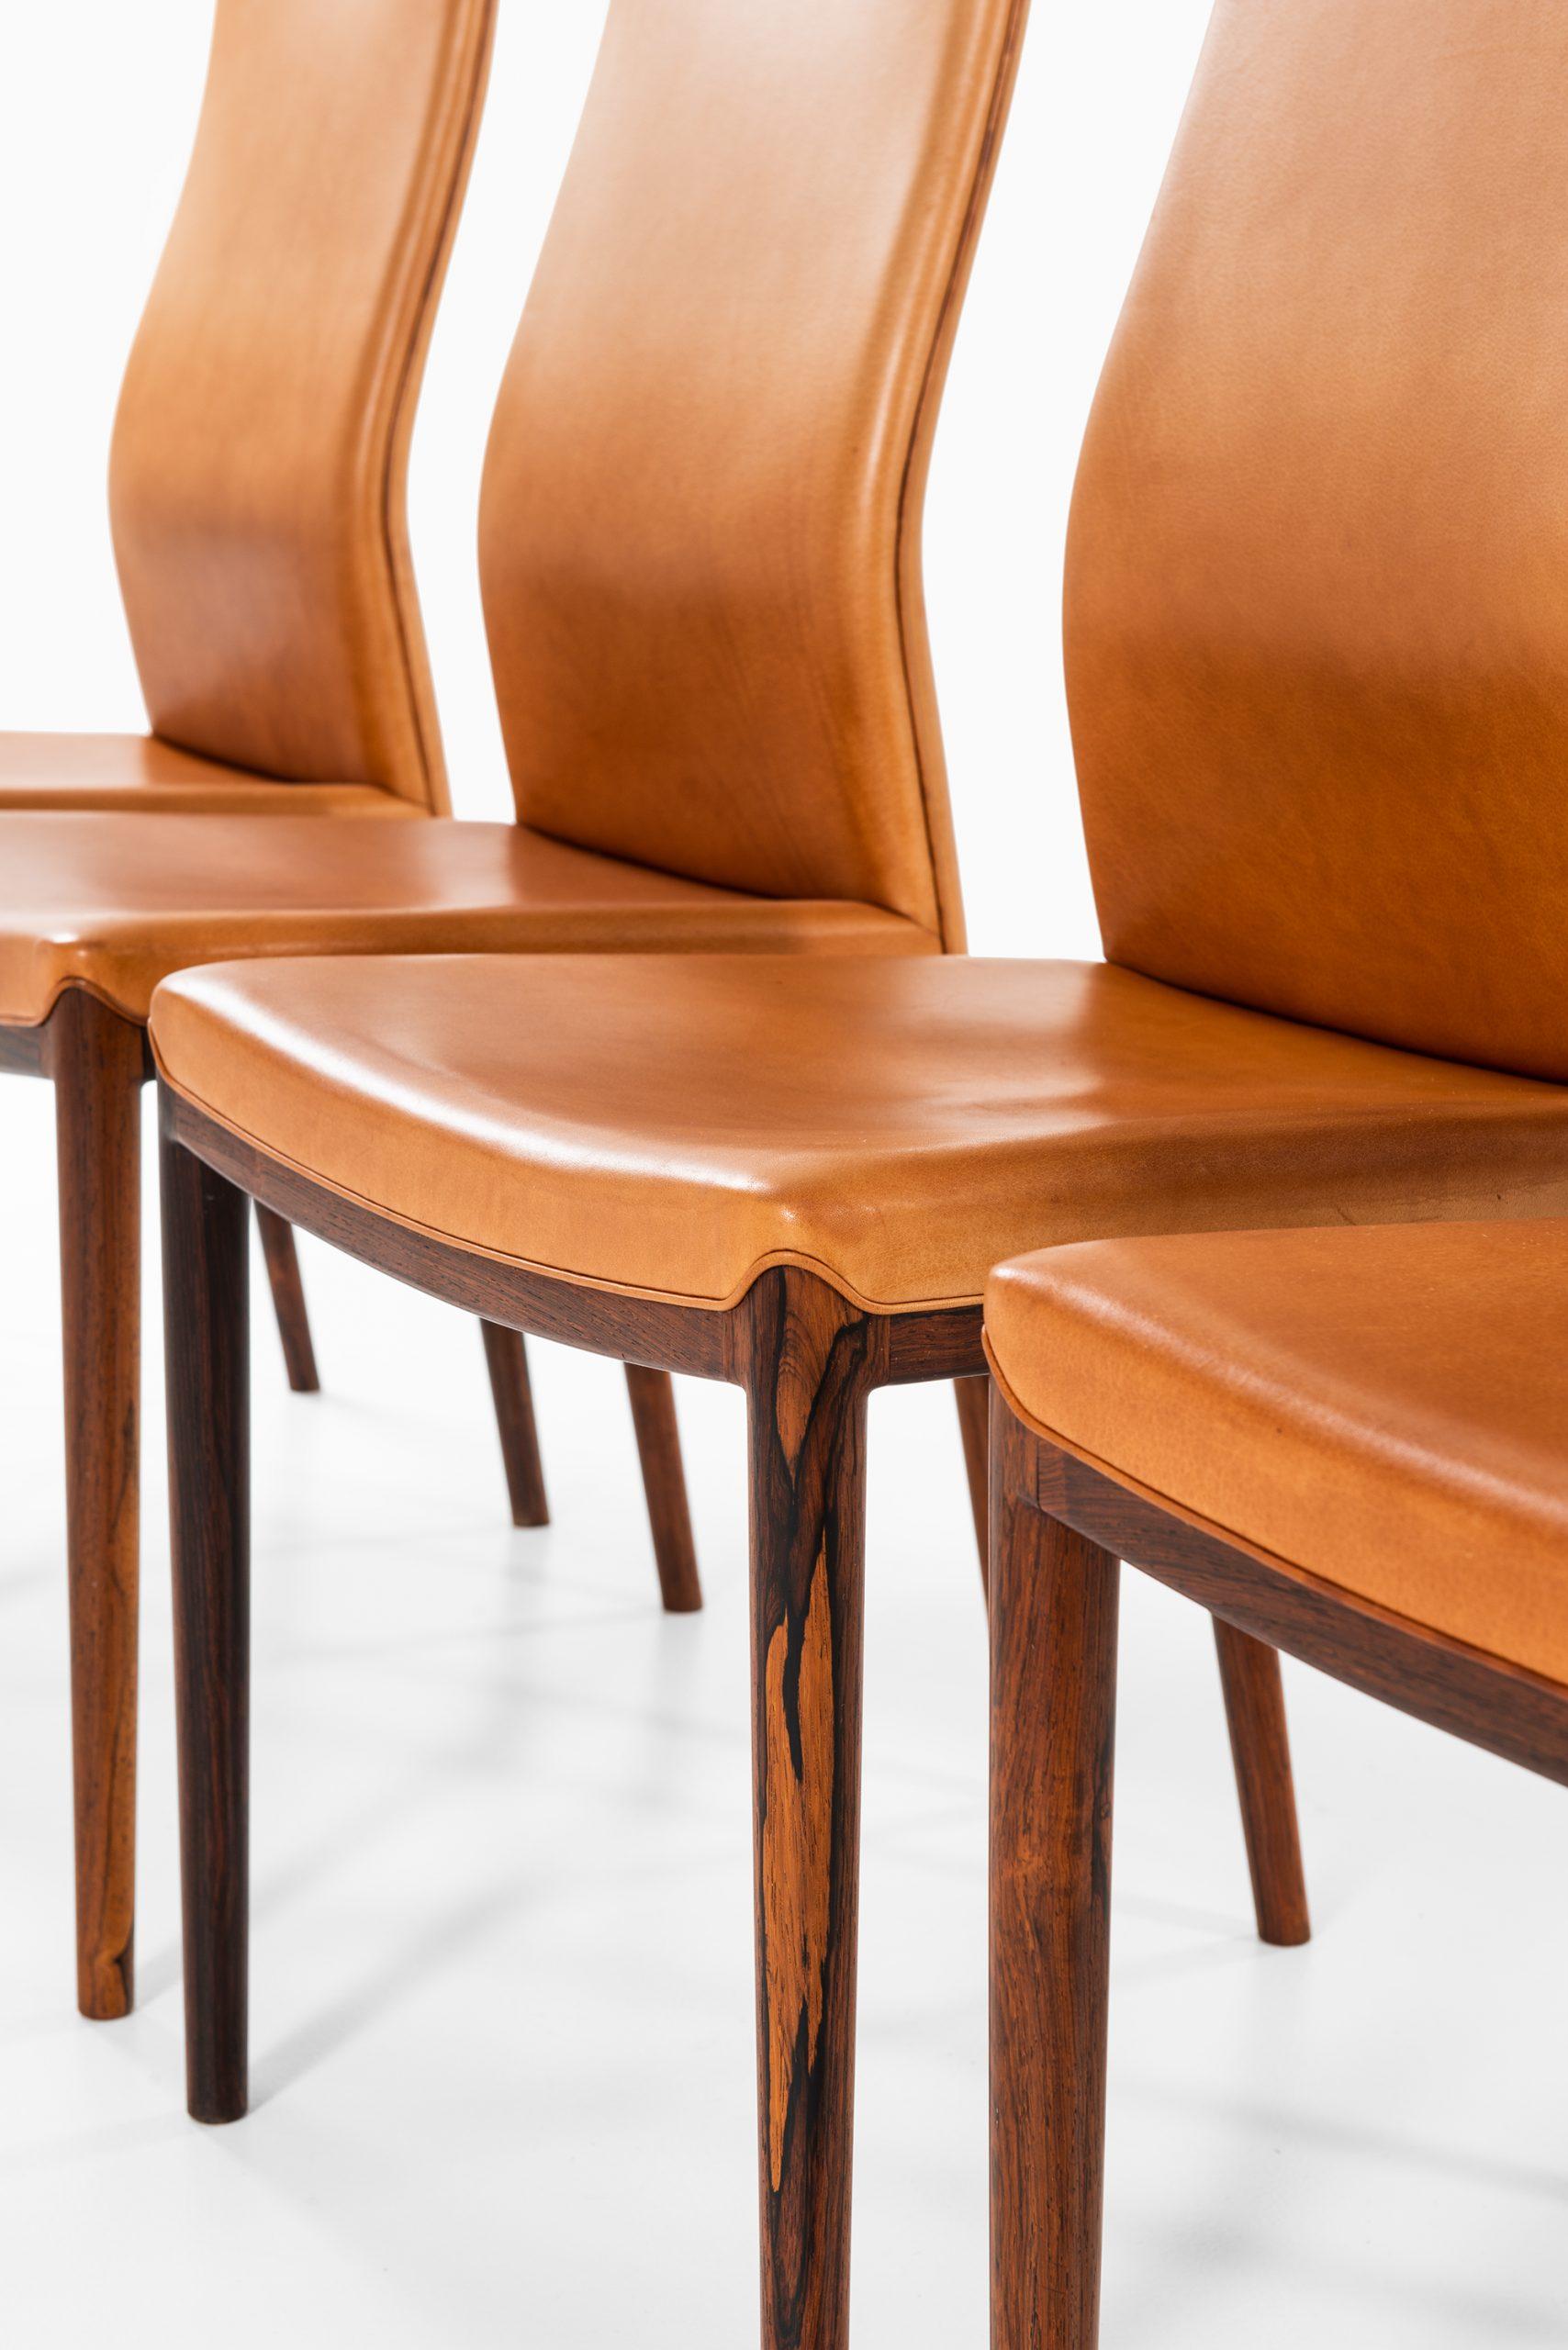 Rarísimo conjunto de 8 sillas de comedor diseñadas por Helge Vestergaard Jensen. Producido por P. Jensen & Co. Ebanistas en Dinamarca.